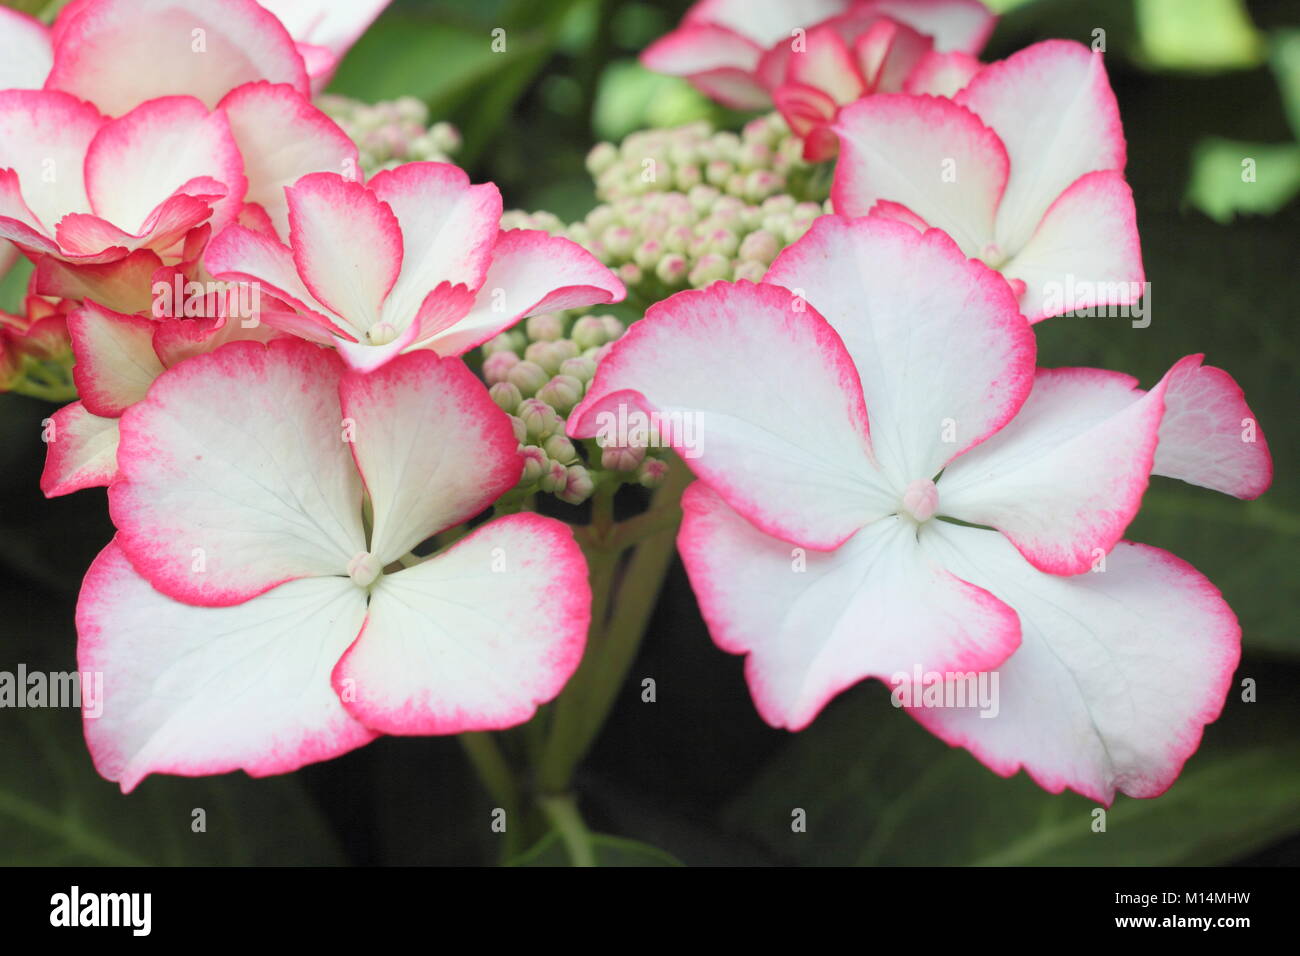 Hydrangea macrophylla lacecap hydrangea 'Love You Kiss' in flower in a garden border, UK. PBR Stock Photo